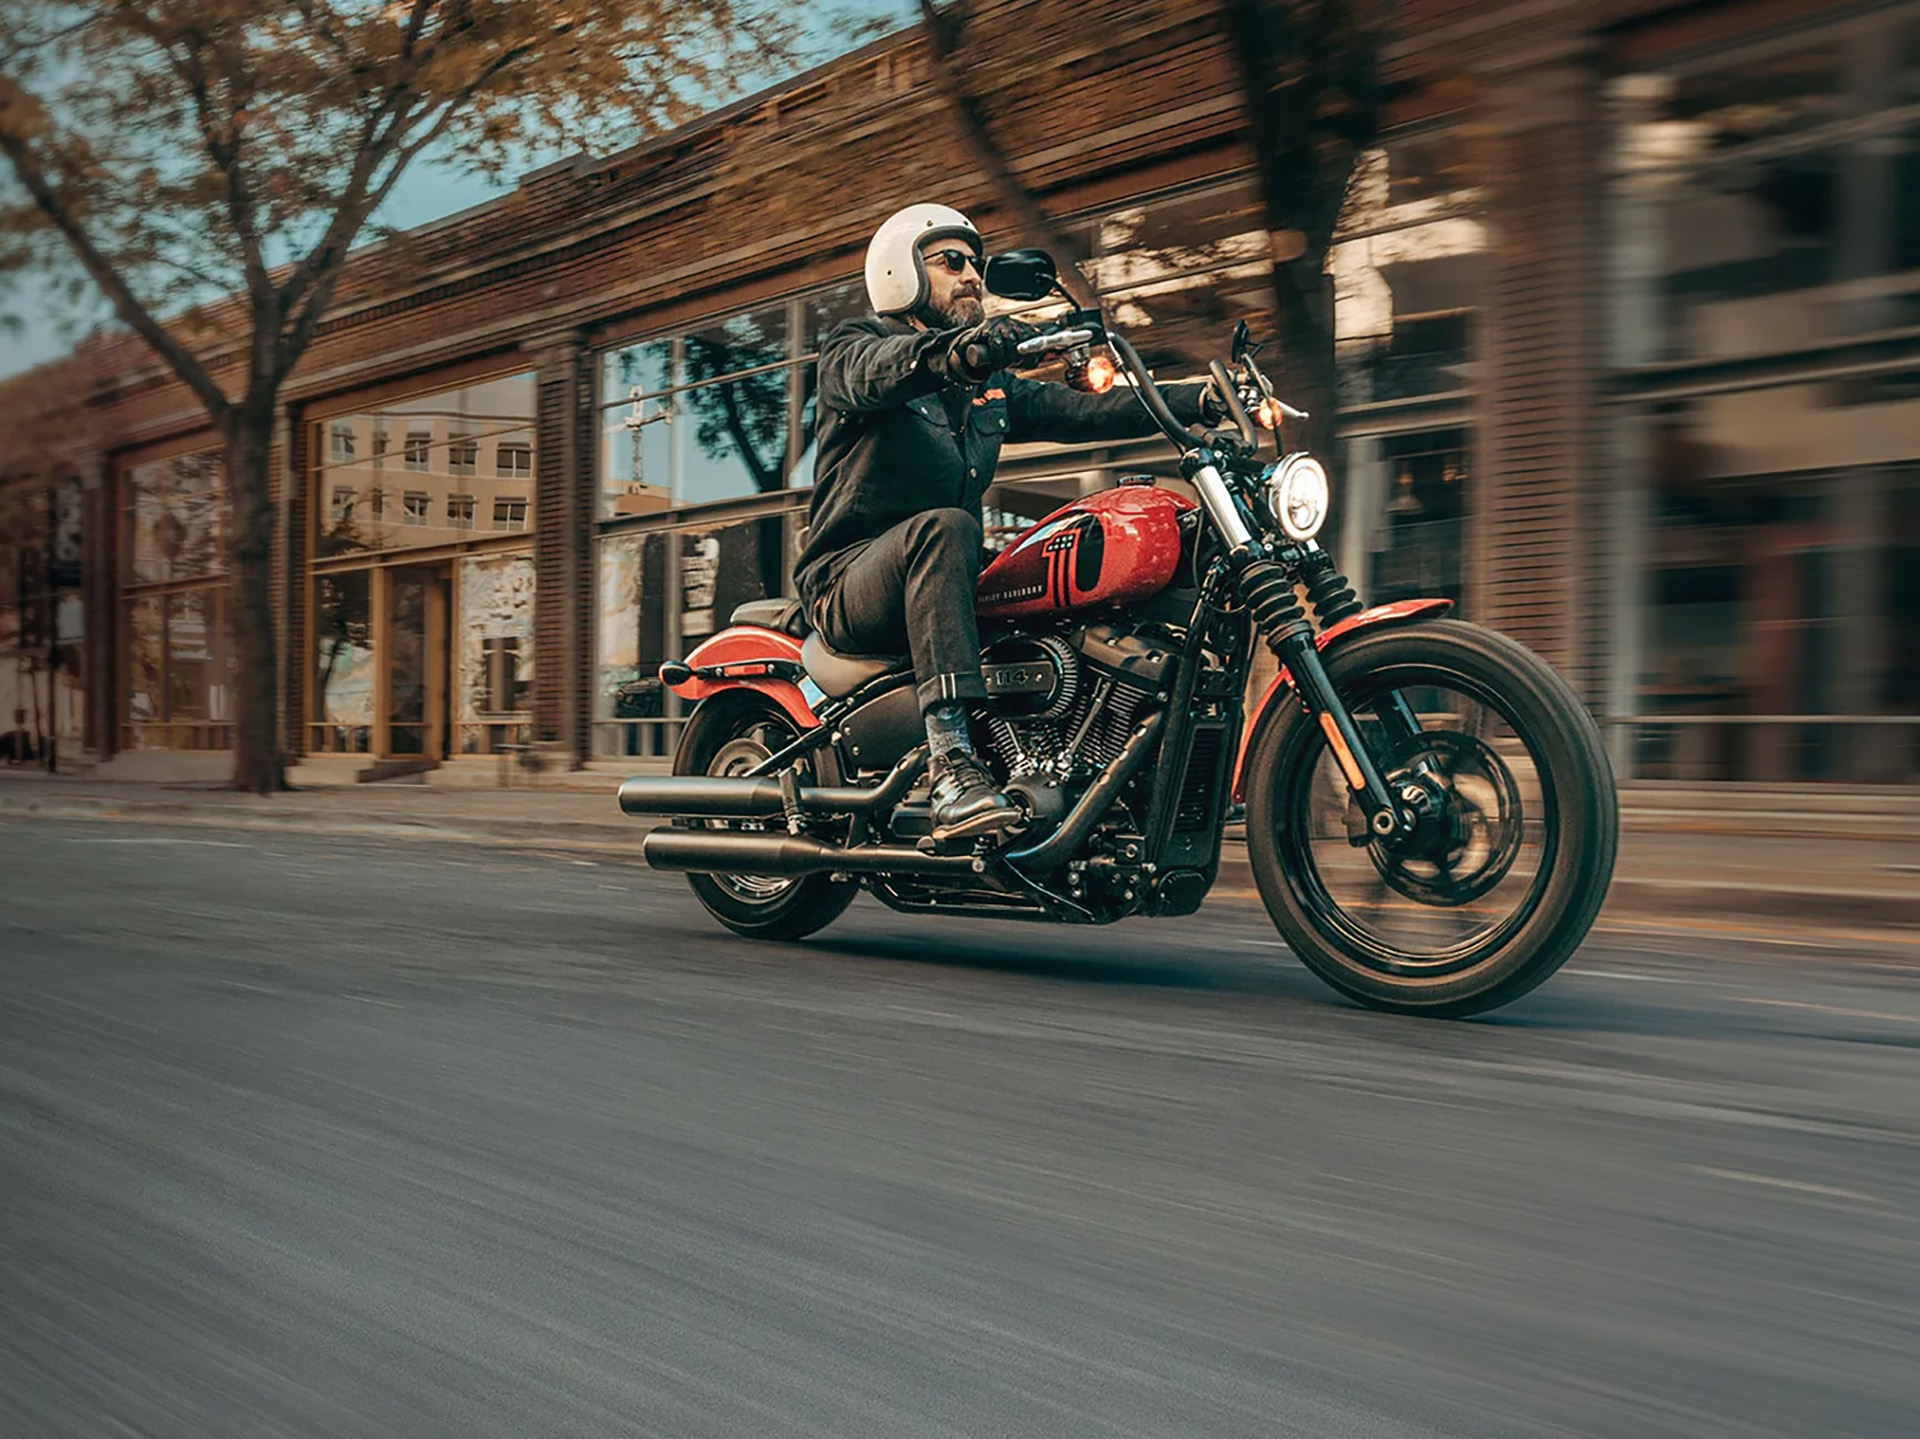 2023 Harley-Davidson Street Bob® 114 in Mount Vernon, Illinois - Photo 2